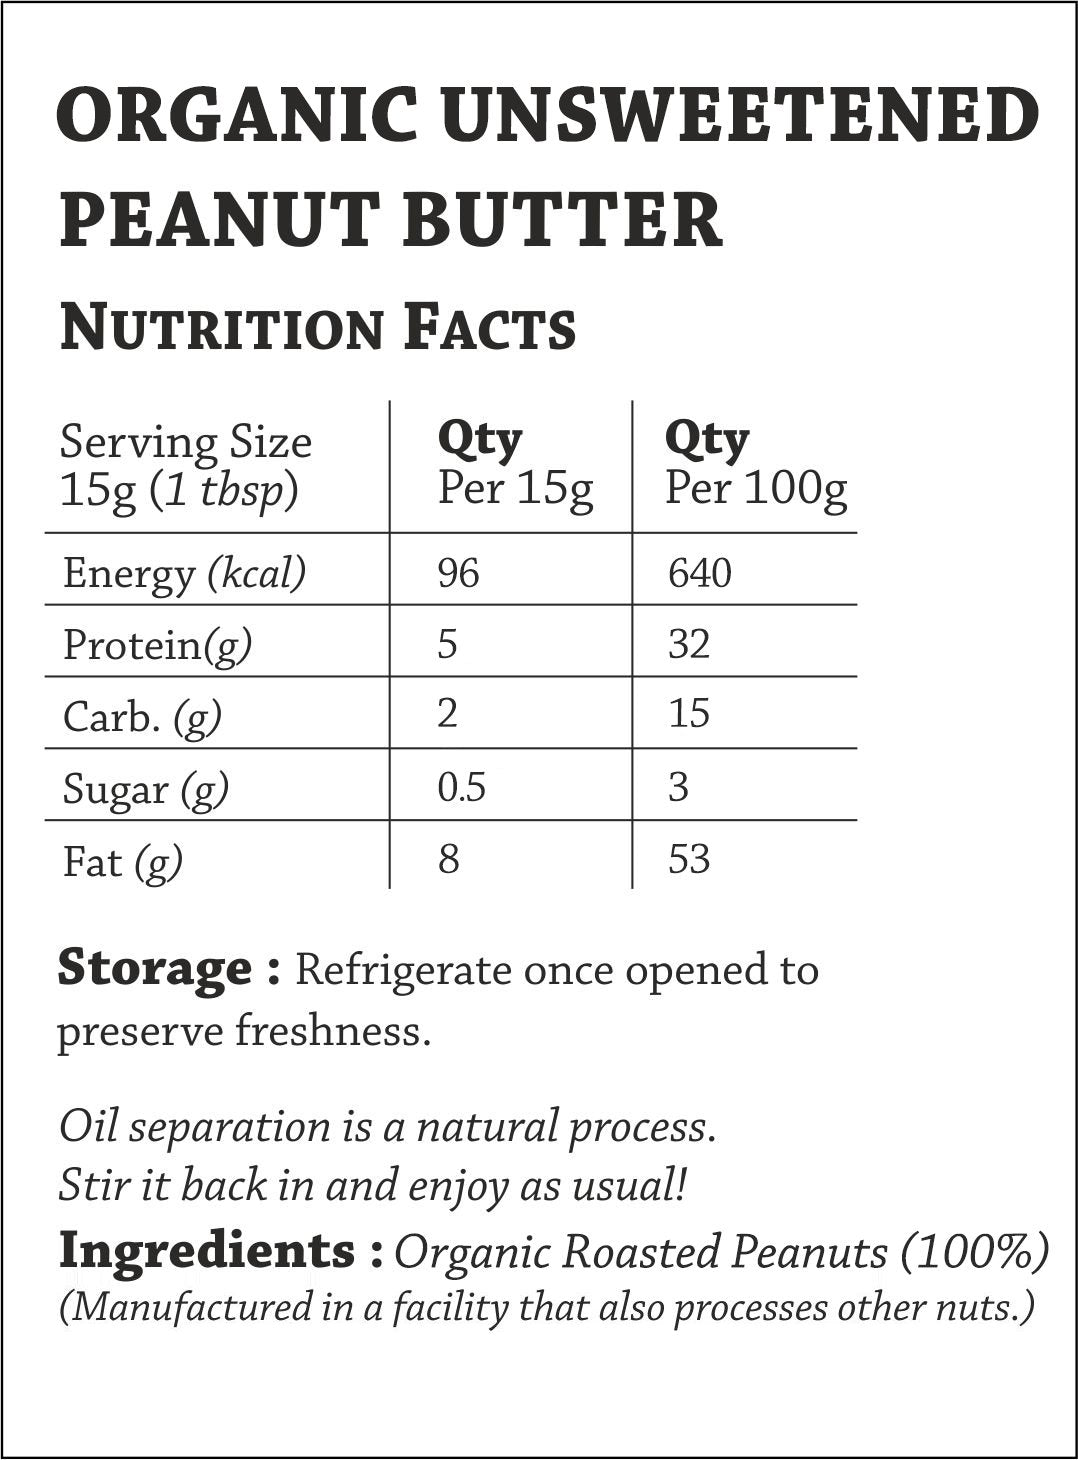 The Butternut Co. Organic Unsweetened Peanut Butter